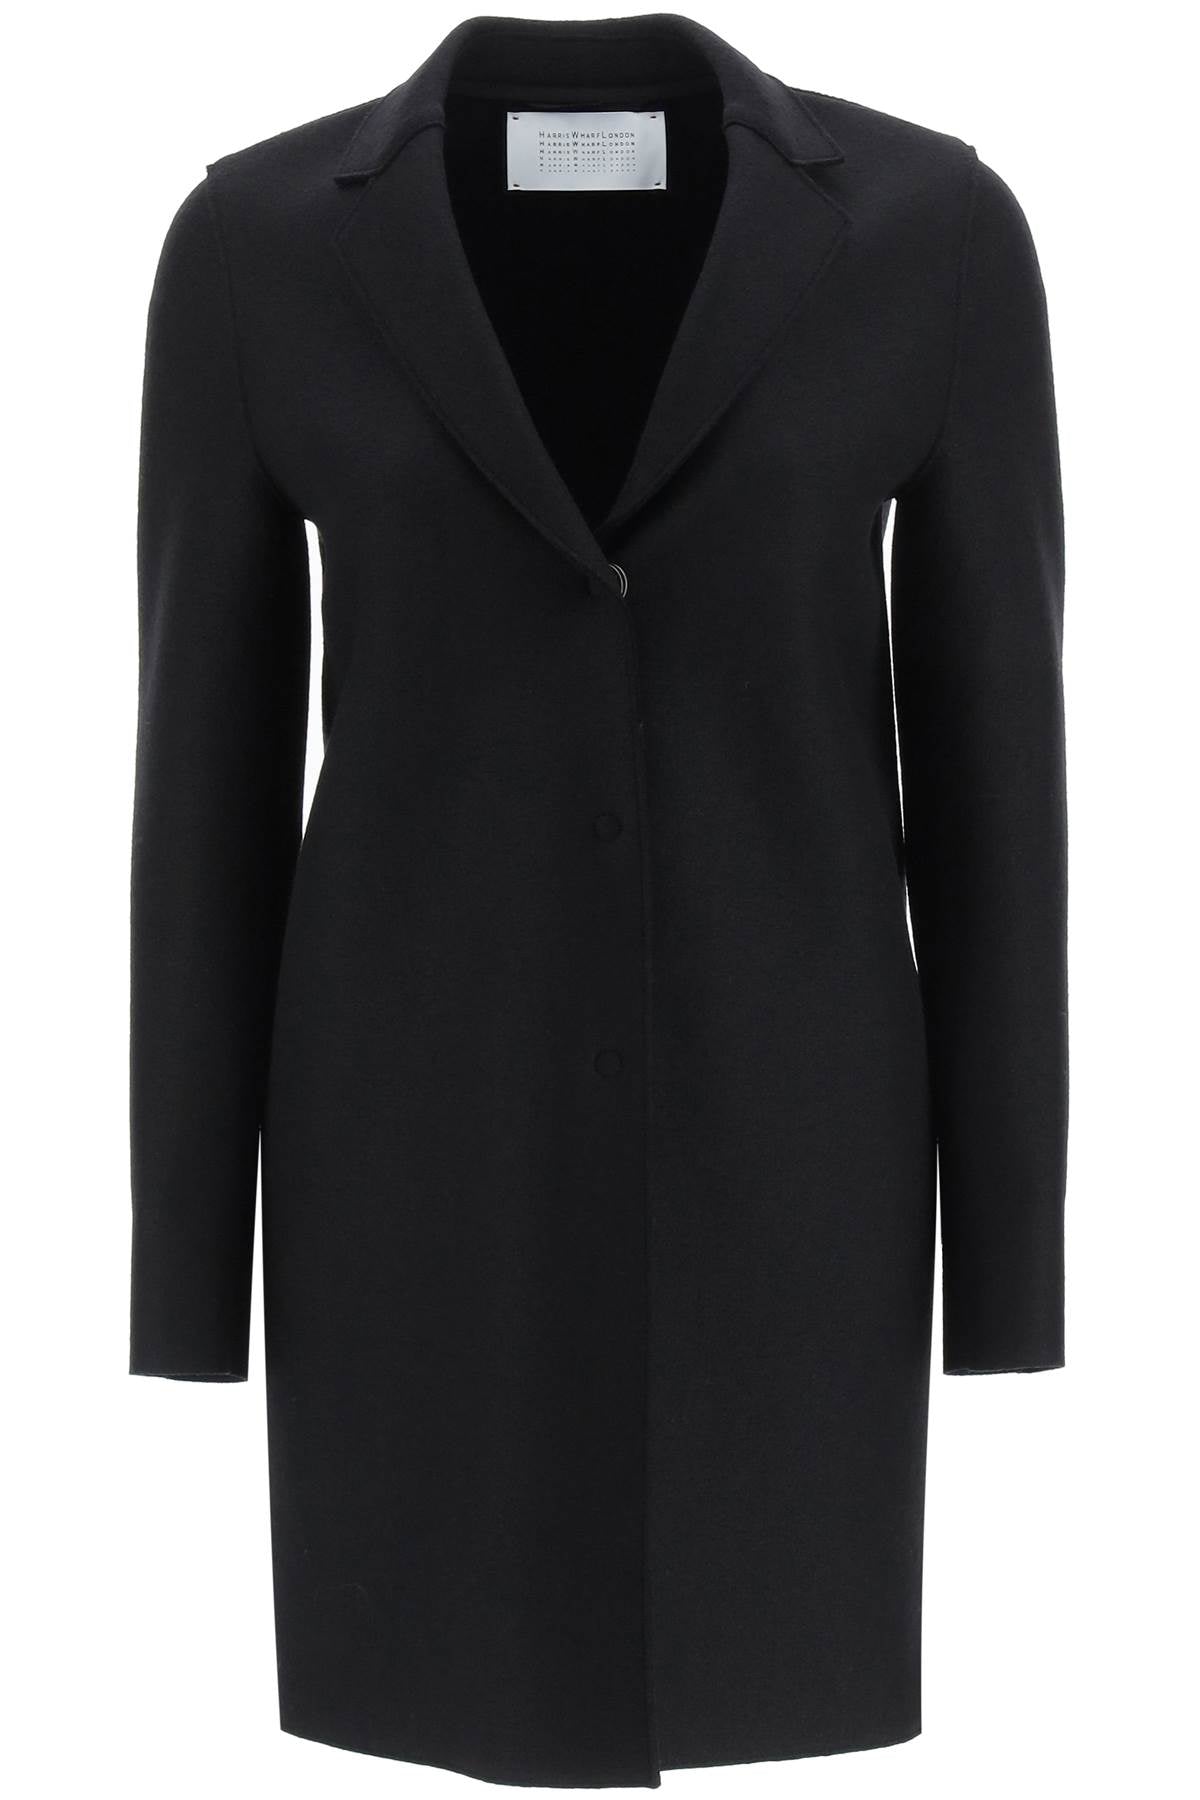 Harris wharf london double-breasted coat in pressed wool-0